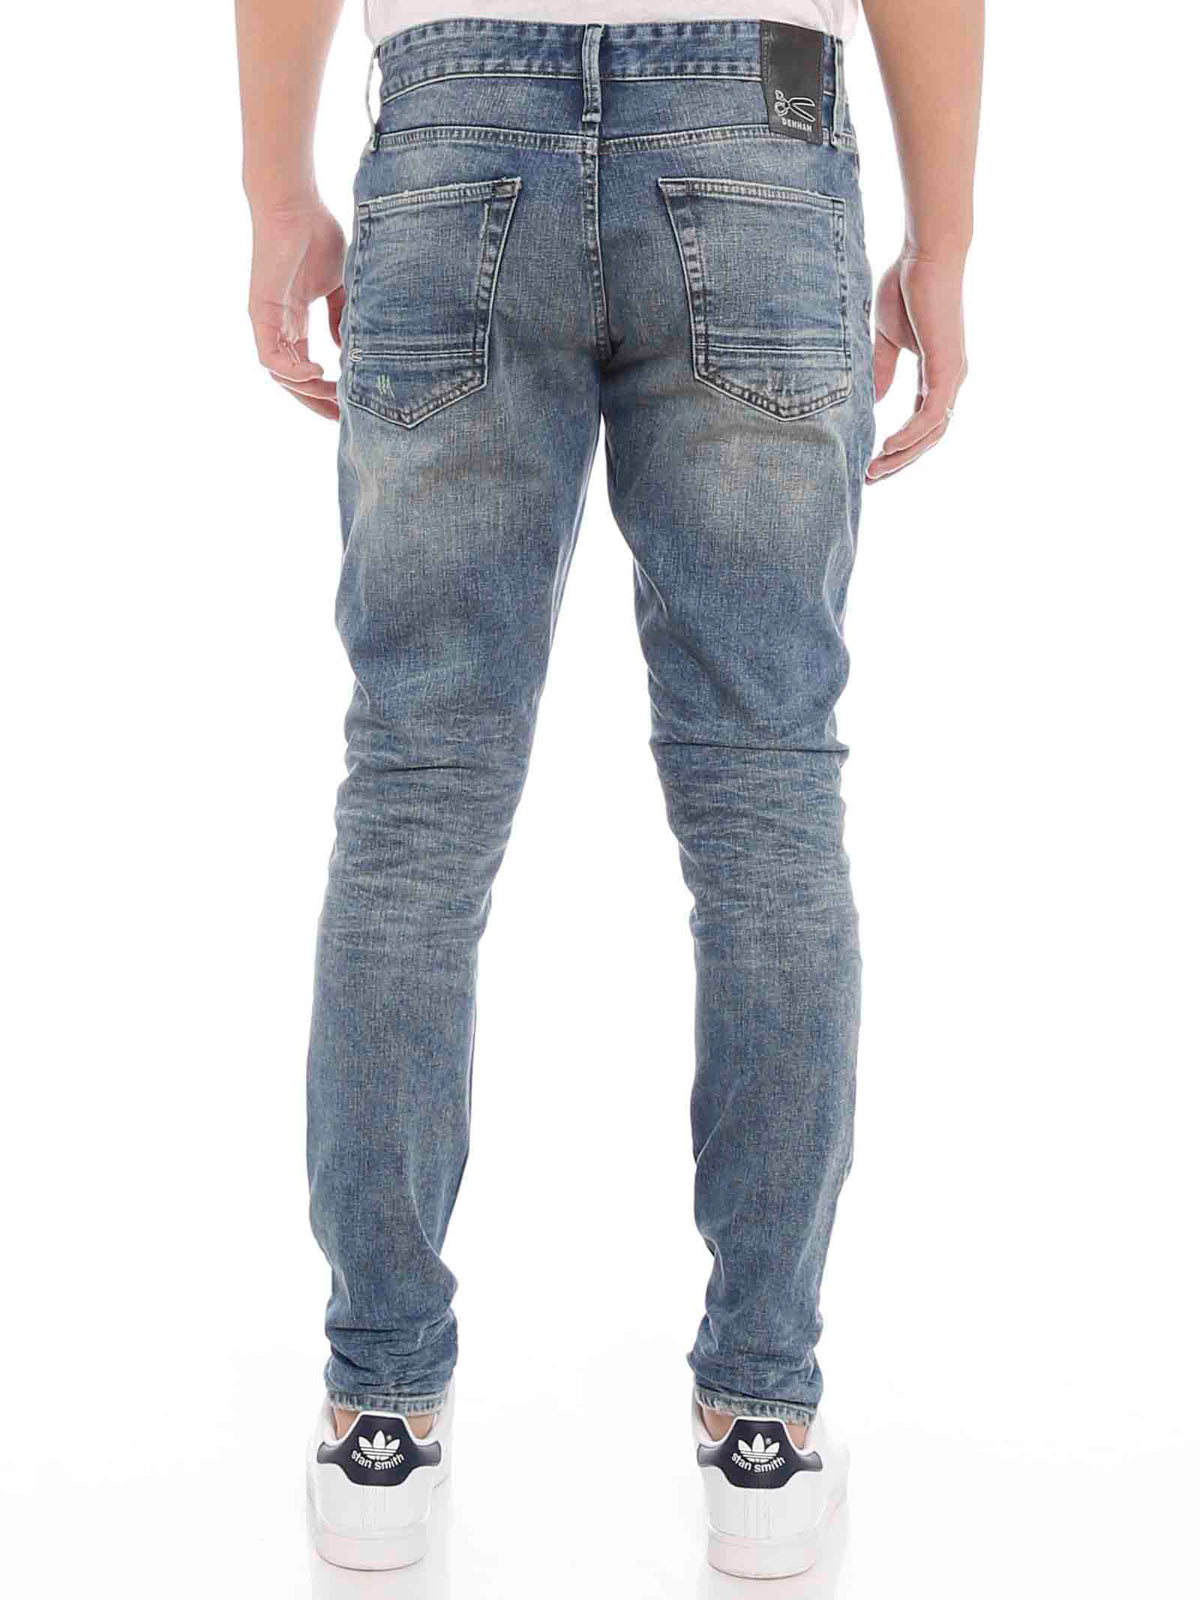 Shank AVS Jeans in Blue Denim